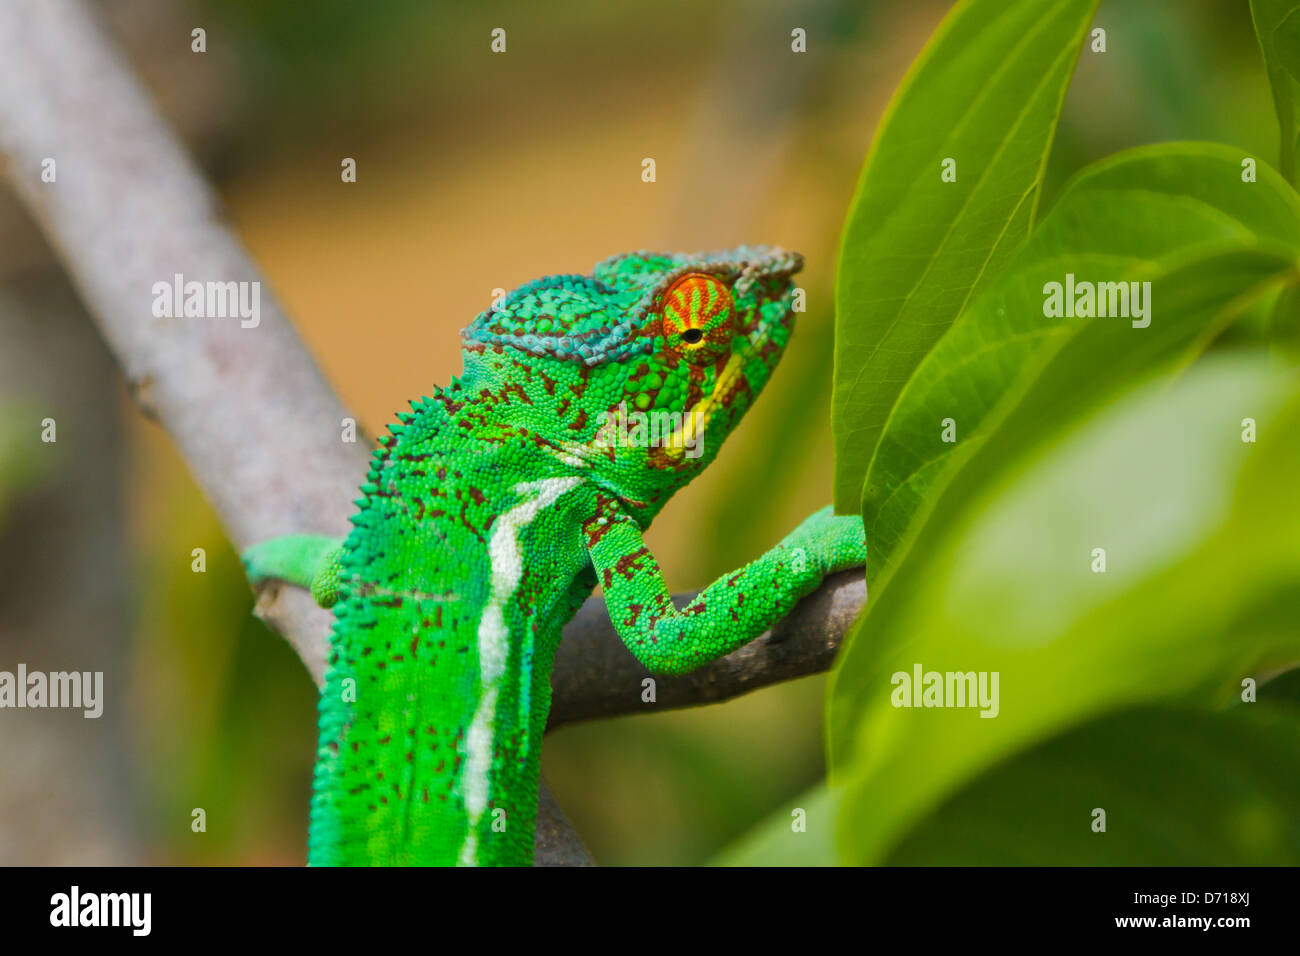 Panther chameleon, Madagascar Stock Photo